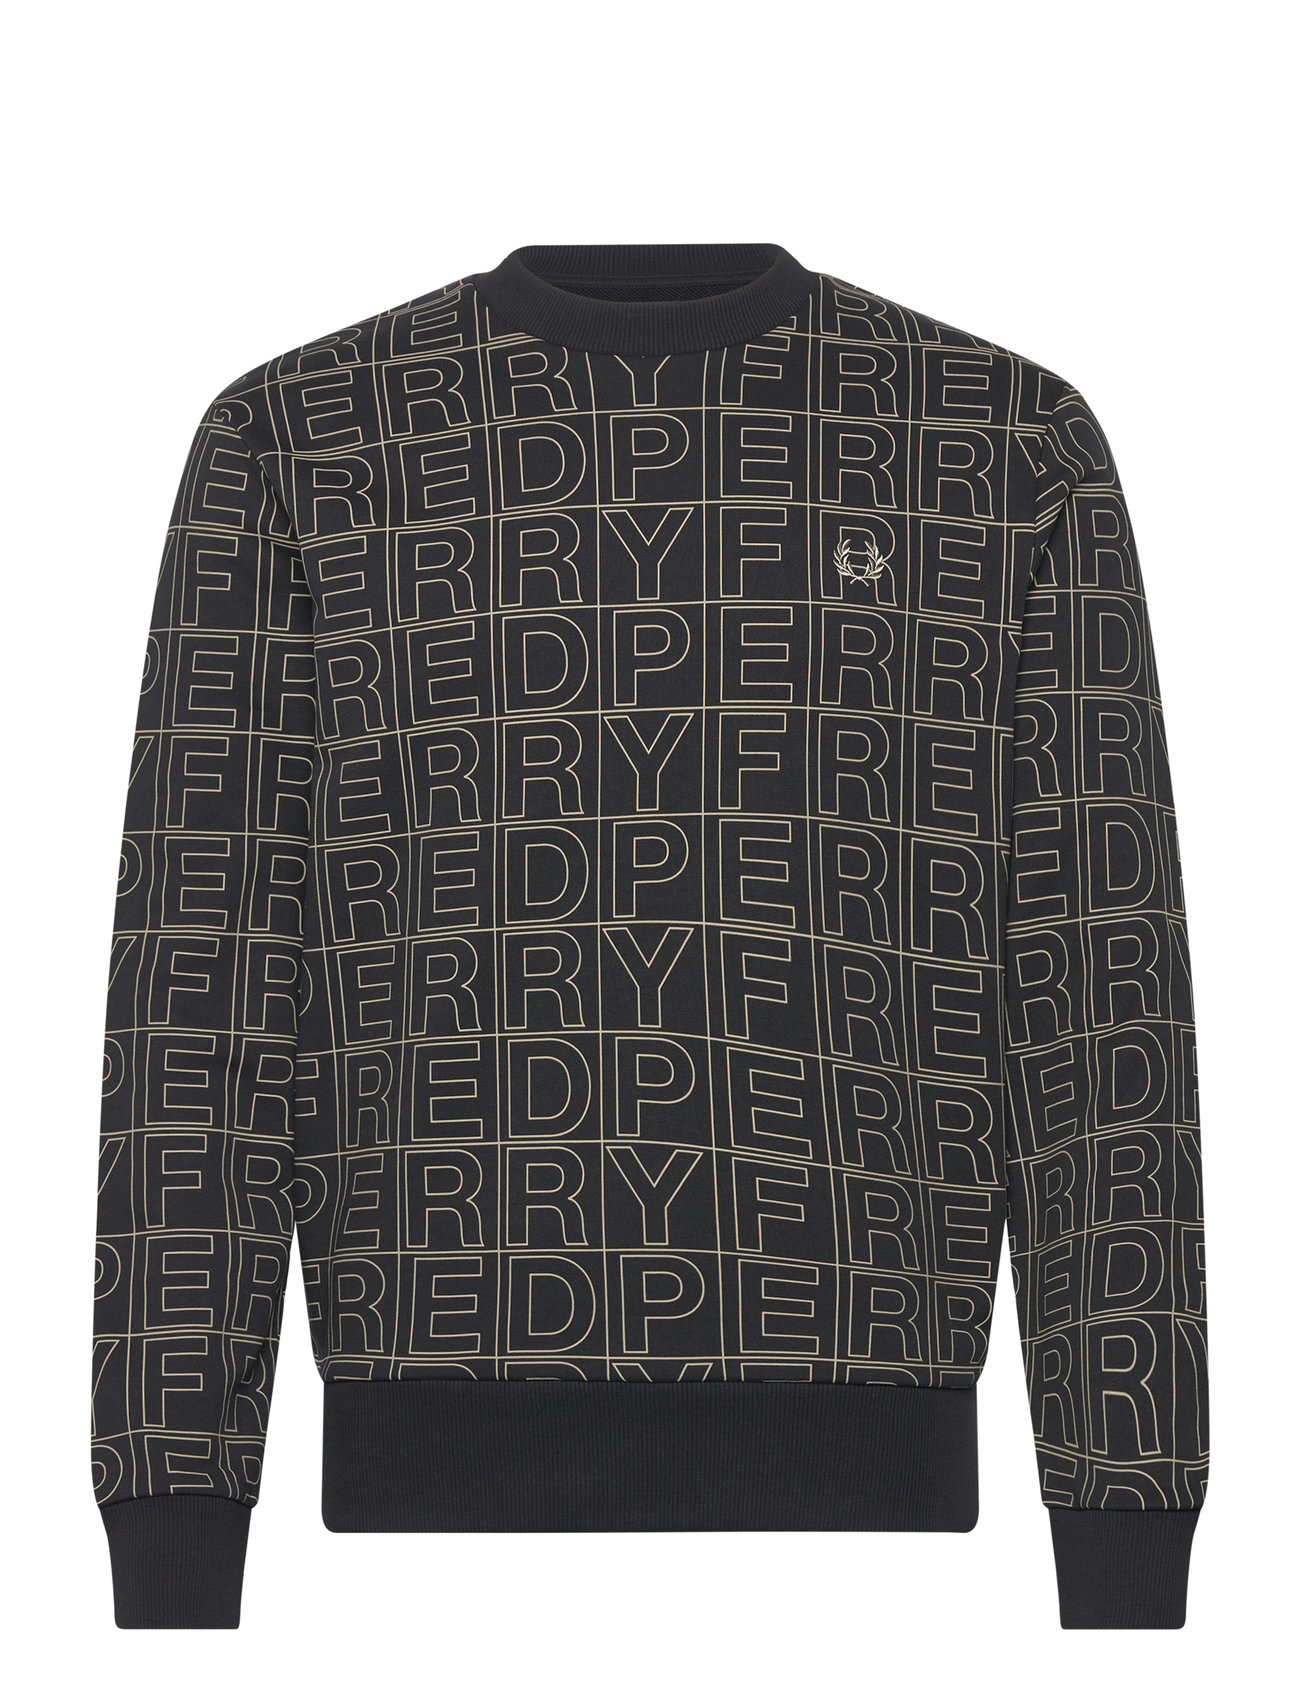 Spellout Graphic Sweatsh Tops Sweatshirts & Hoodies Sweatshirts Black Fred Perry